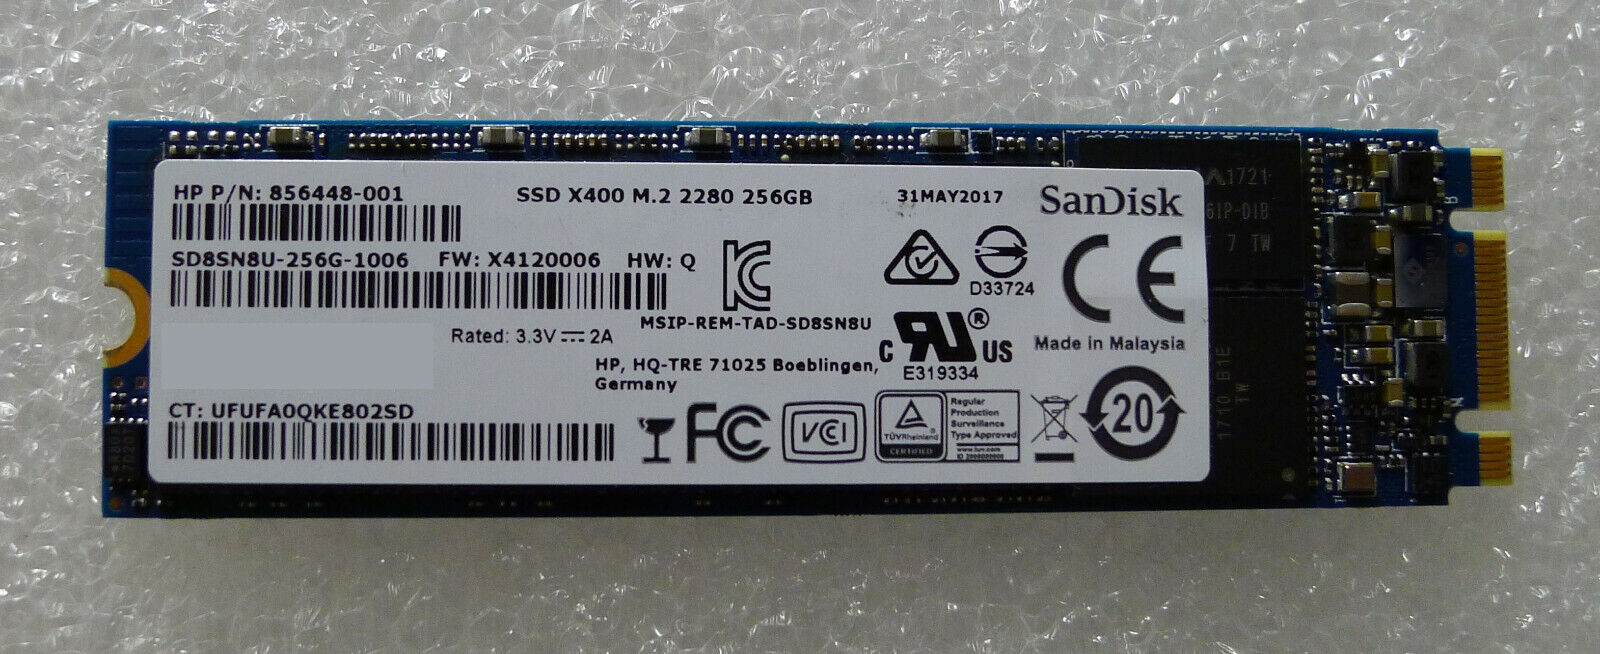 SanDisk SSD X400 M.2 2280 256GB